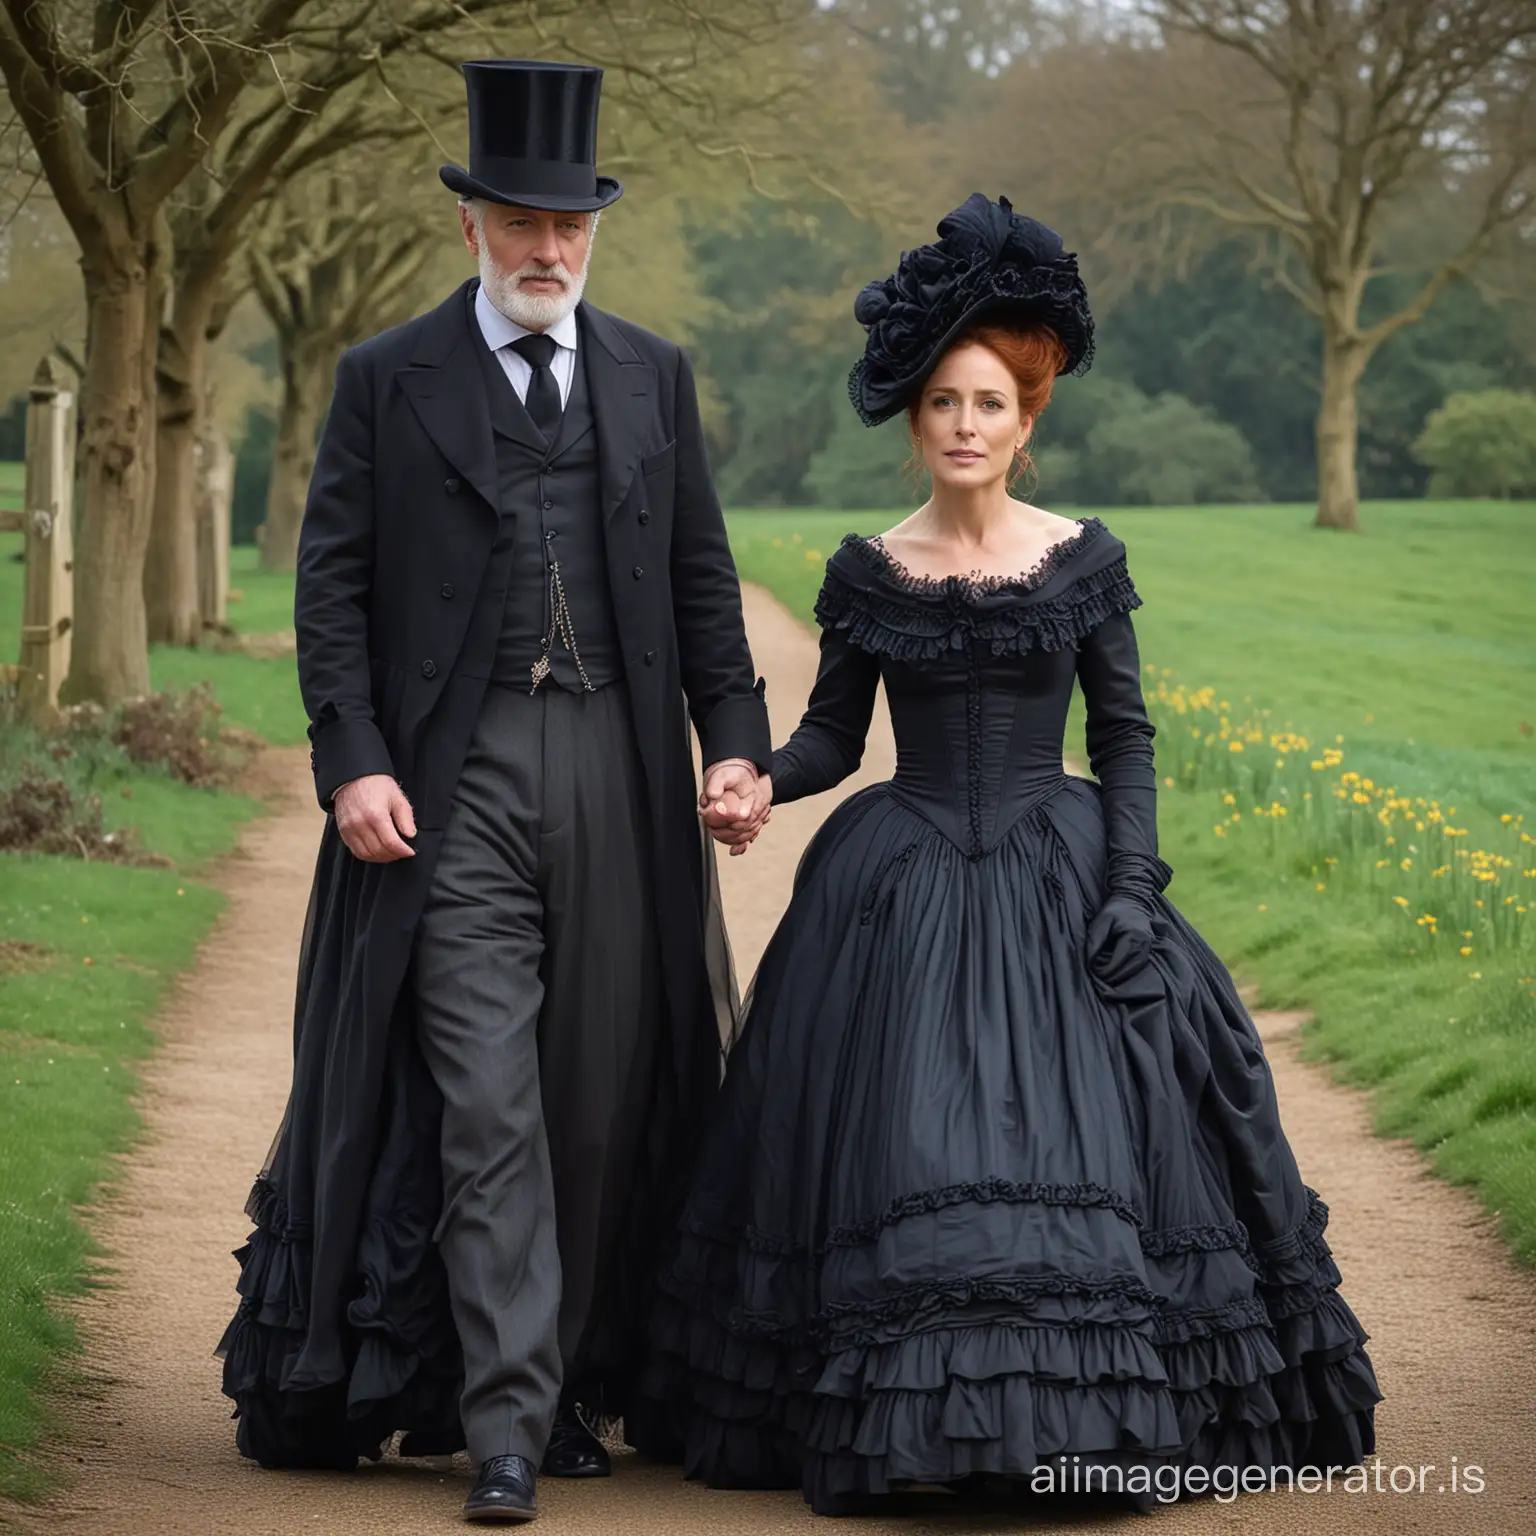 Victorian-Newlyweds-Elegant-Redhead-Bride-and-Groom-Stroll-Together